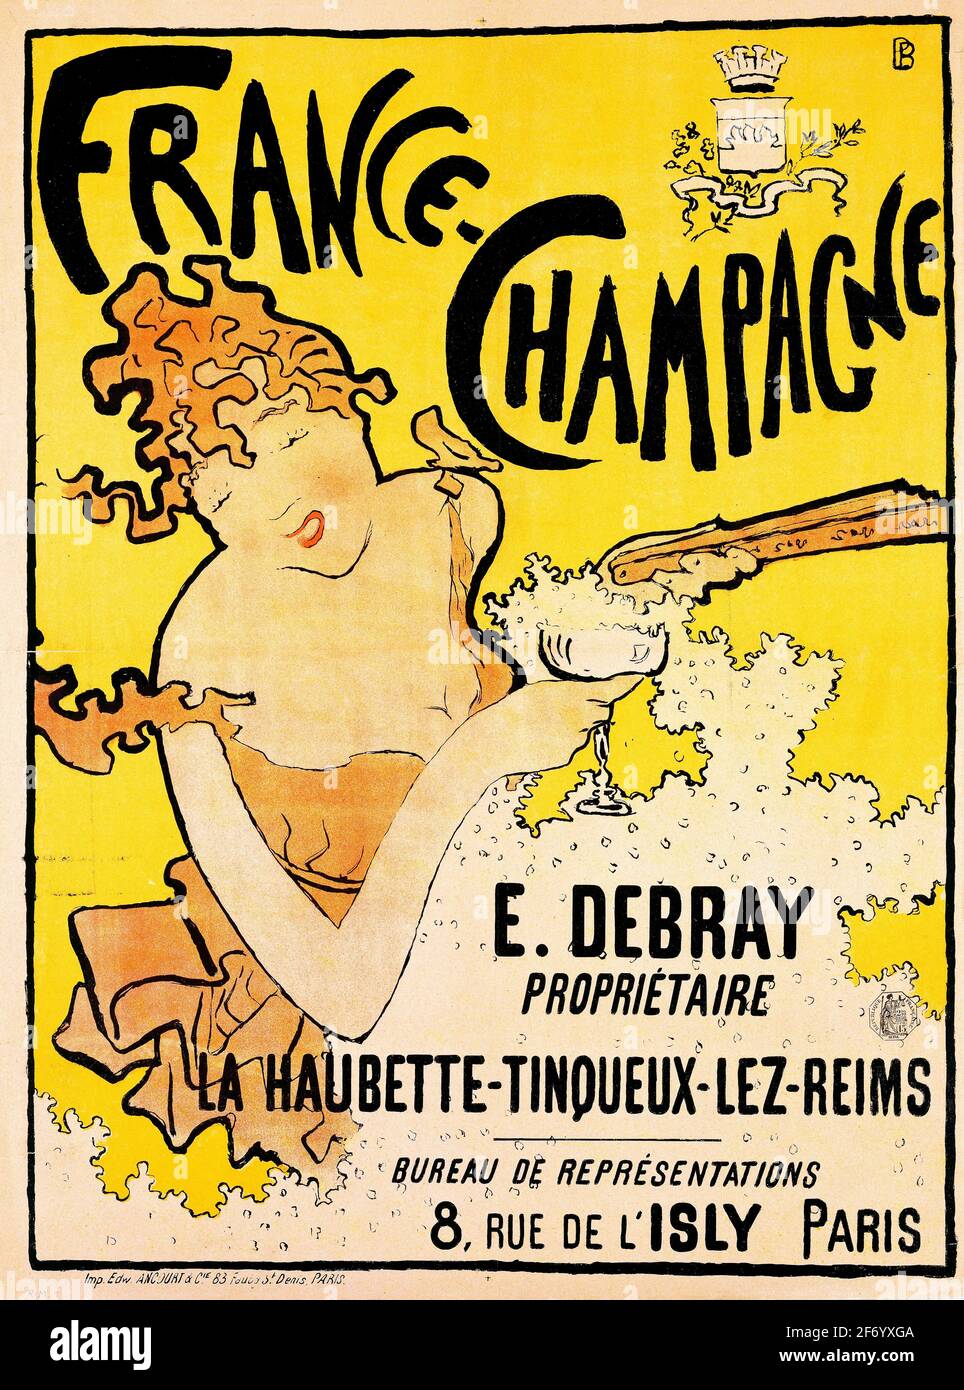 Francia Champagne, cartel de estilo Art Nouveau del artista francés Pierre Bonnard (1867-1947), litografía en color, c. 1889/91 Foto de stock